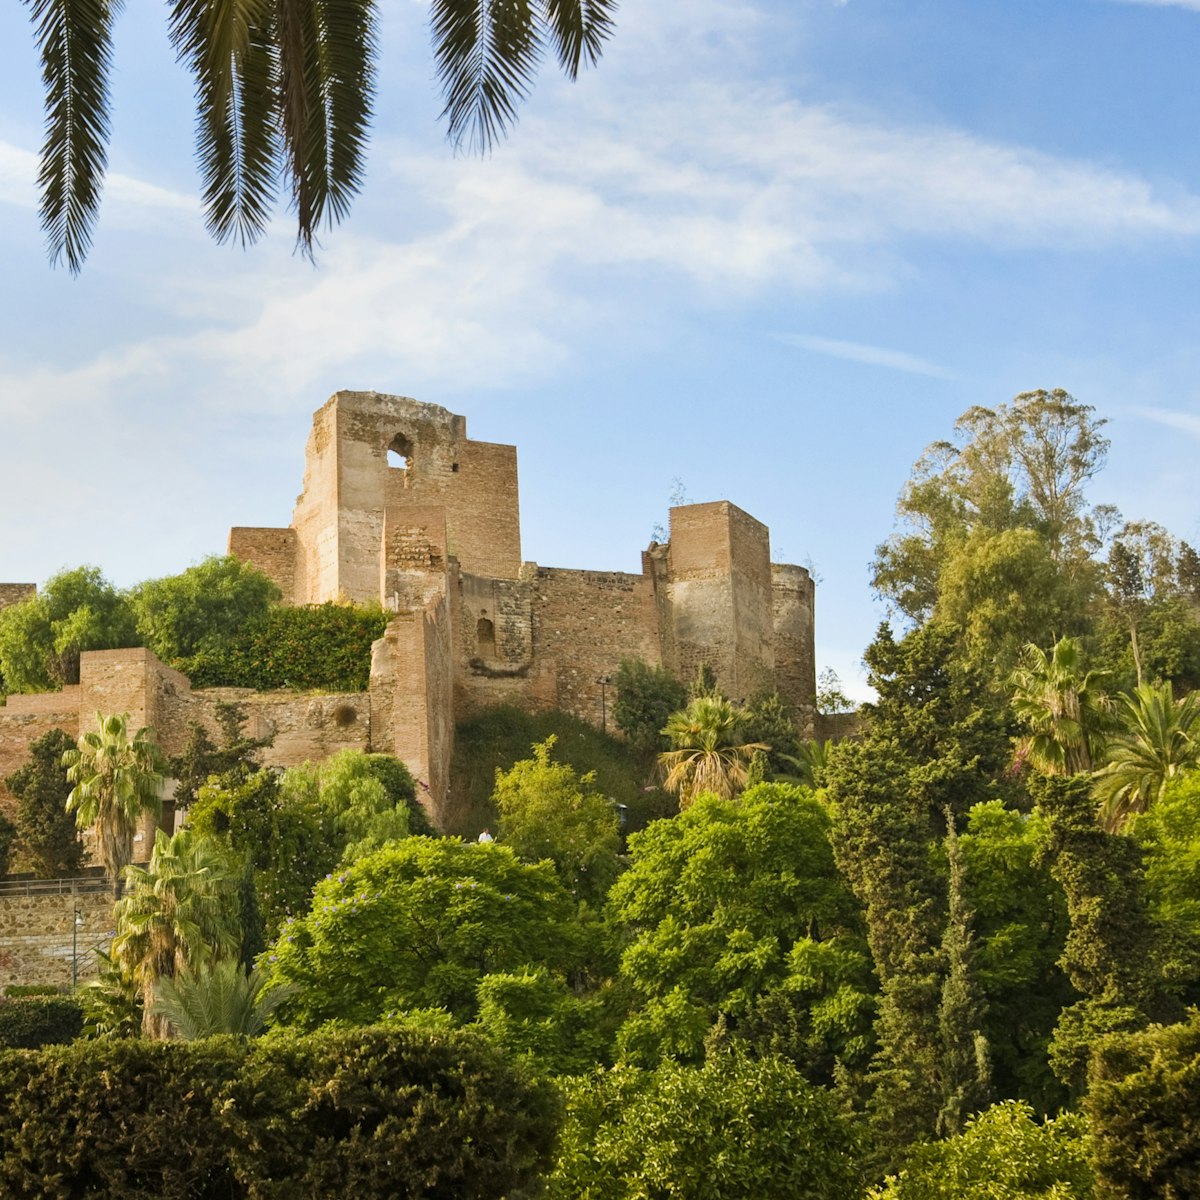 Alcazaba, Malaga, Andulucia, Spain